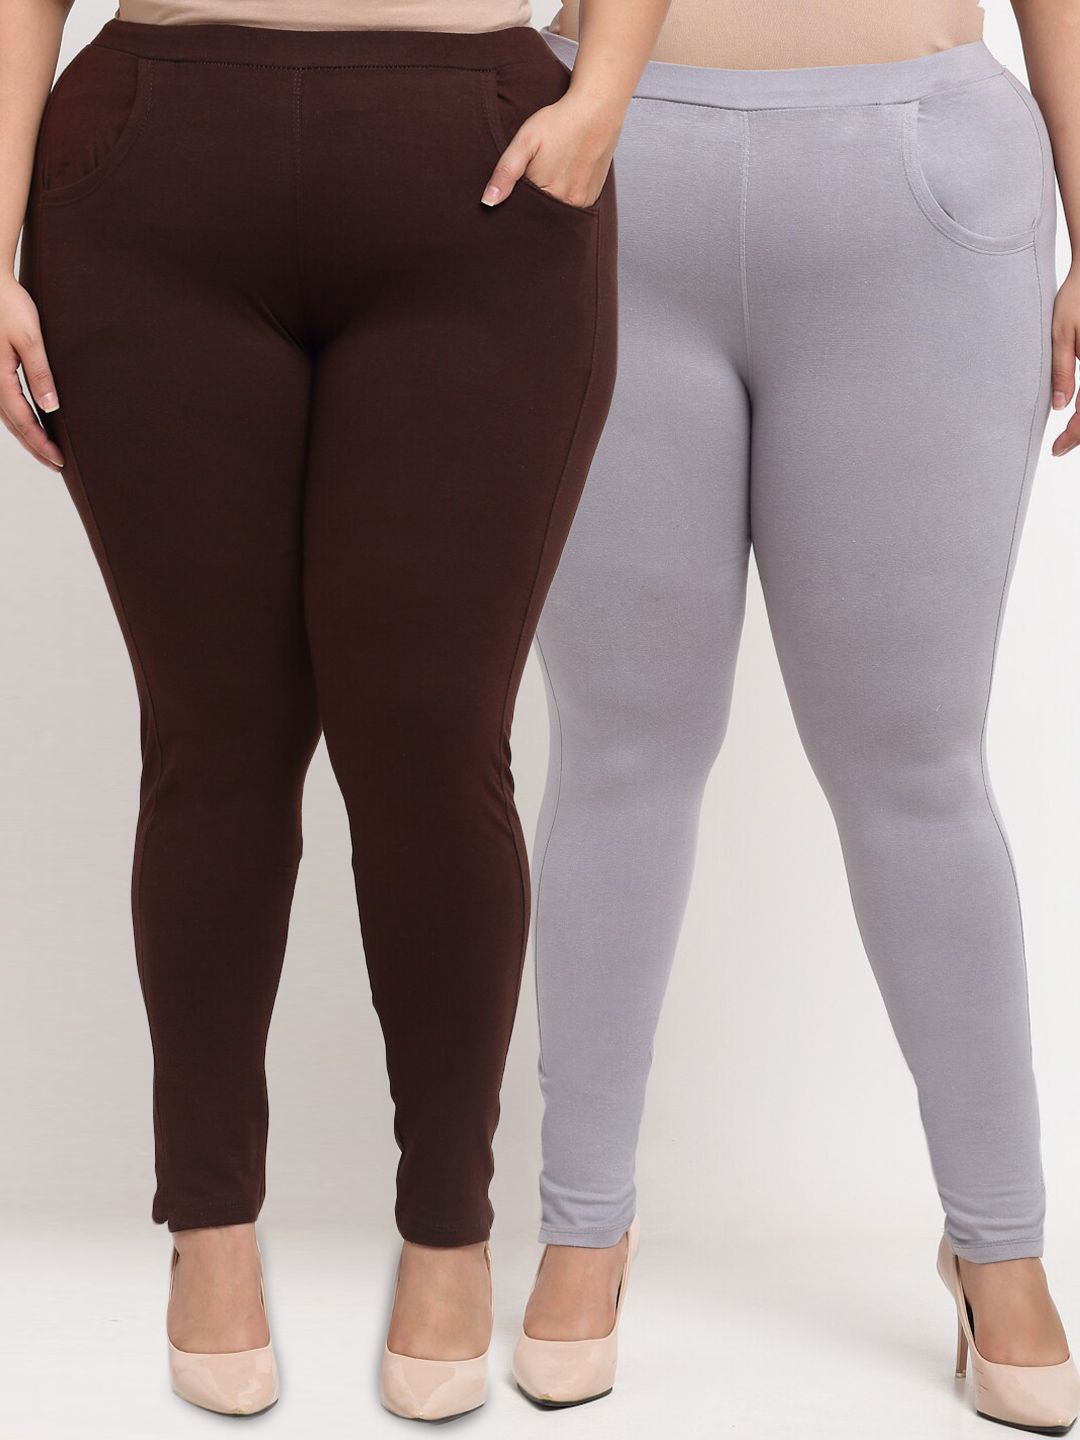 TAG 7 PLUS Women Grey & Brown Set of 2 Plus Size Leggings Price in India